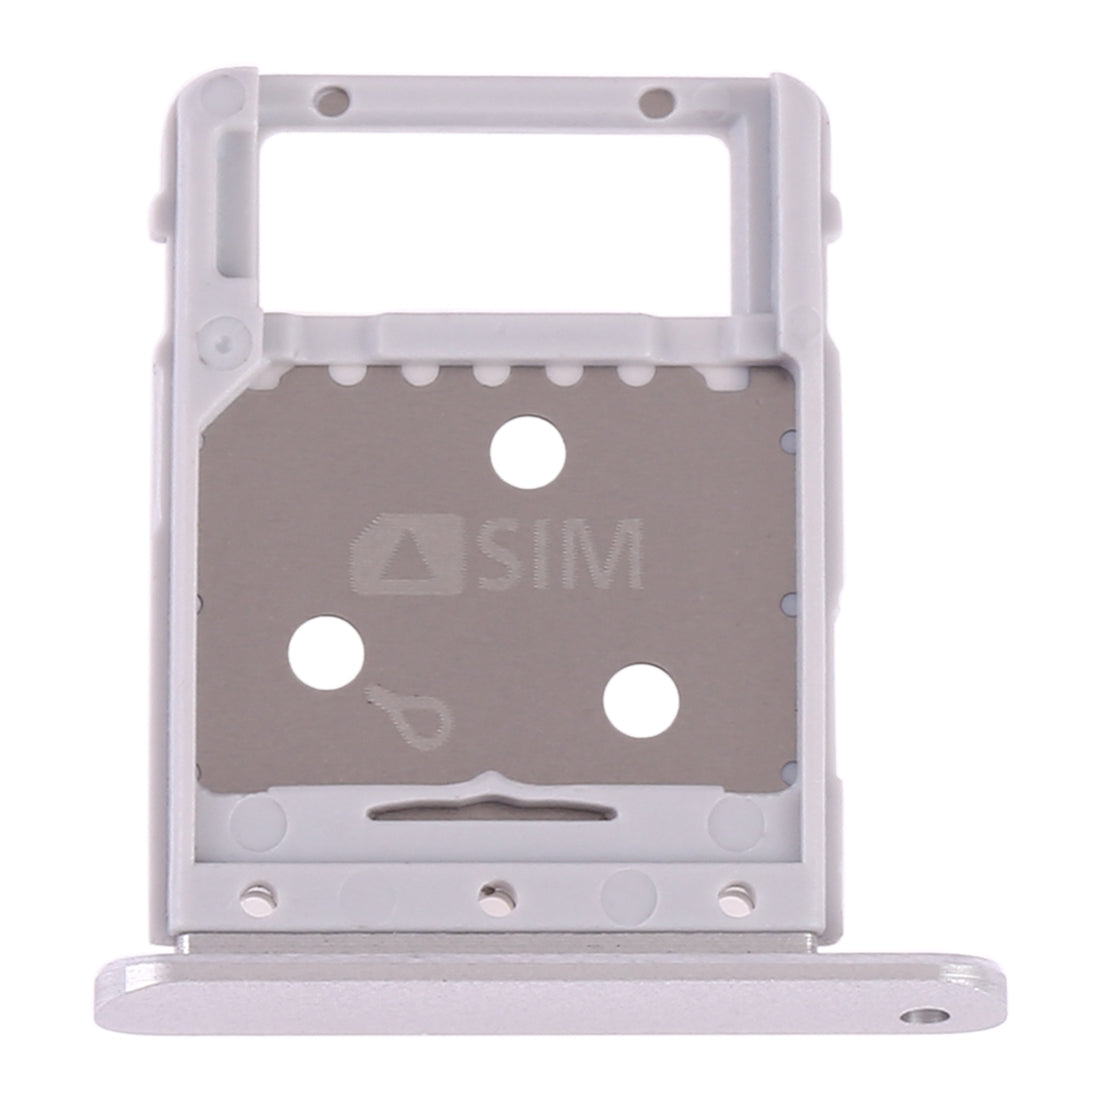 SIM / Micro SD Tray Holder Samsung Galaxy Tab S4 10.5 T835 Silver